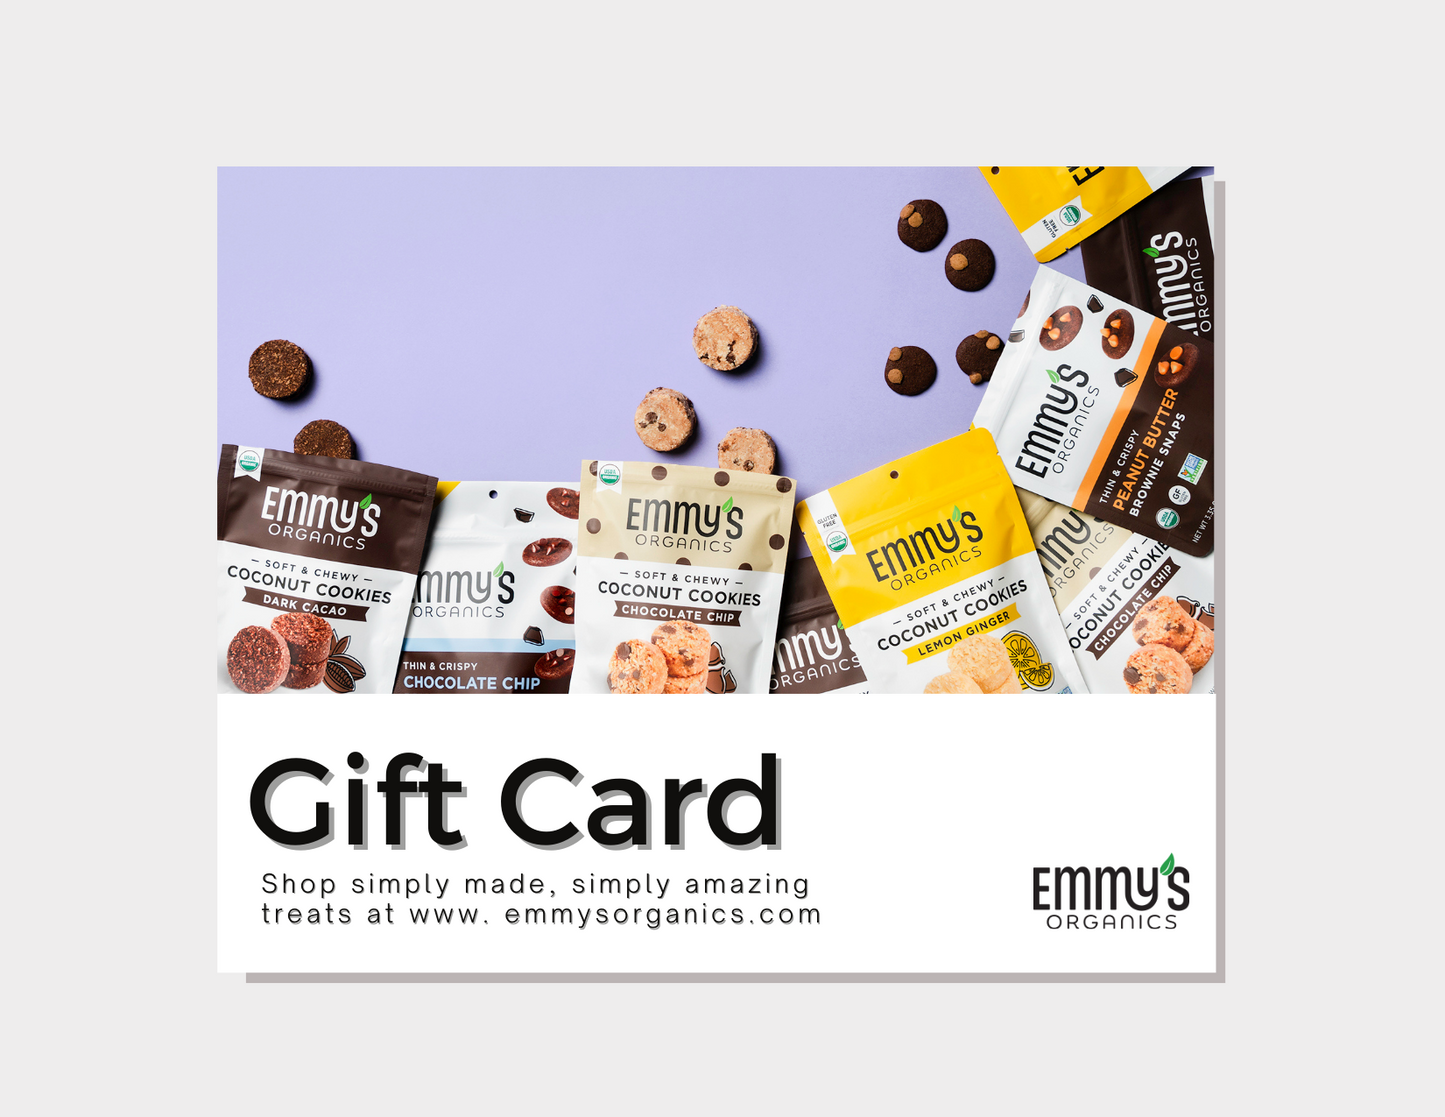 Emmy's Organics Gift Card